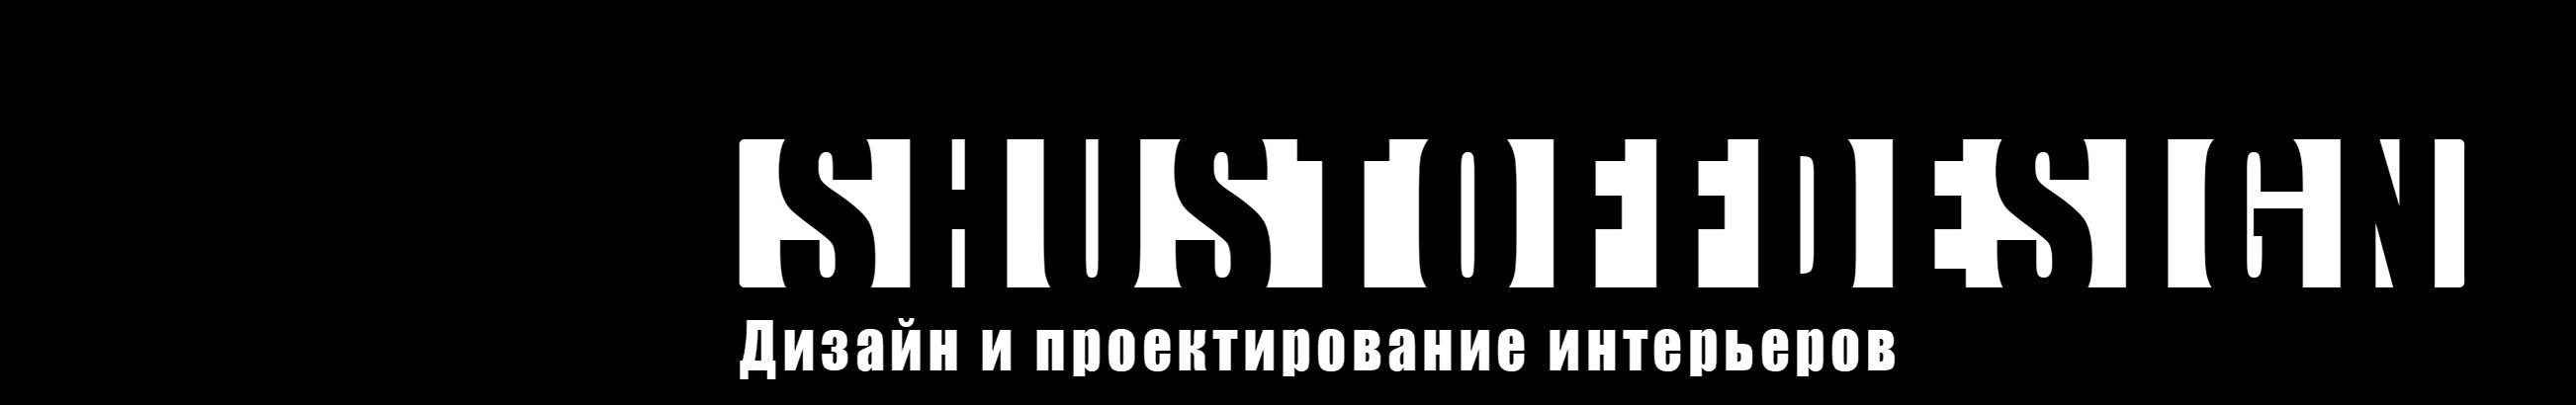 Баннер профиля Sergey Shustov